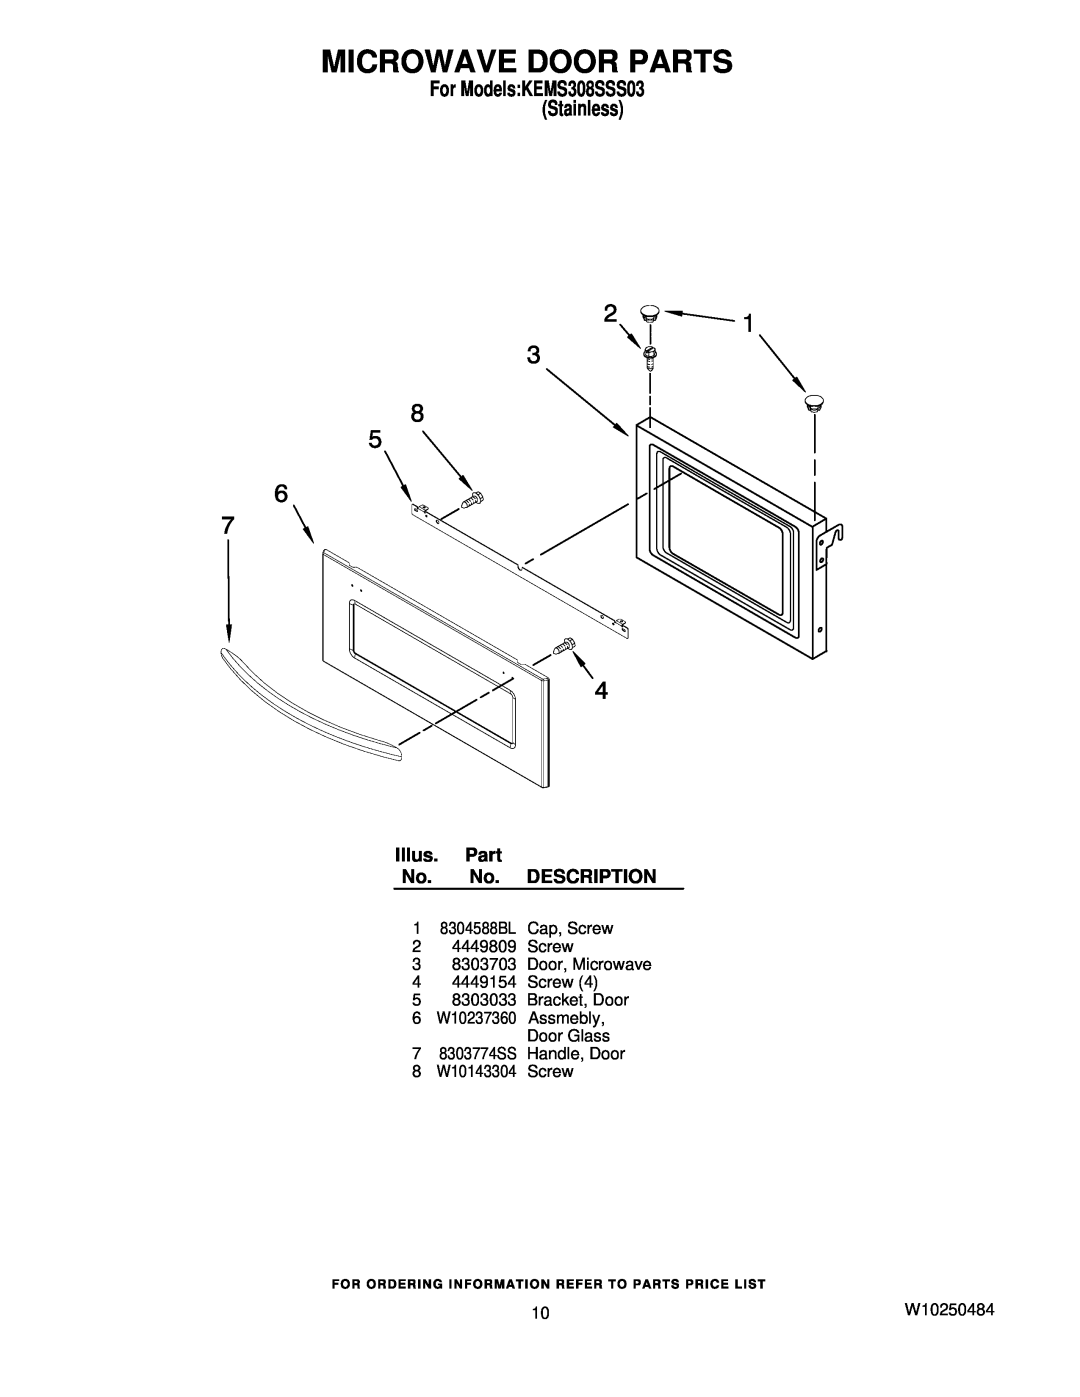 KitchenAid manual Microwave Door Parts, Illus. Part No. No. DESCRIPTION, For ModelsKEMS308SSS03 Stainless, W10250484 